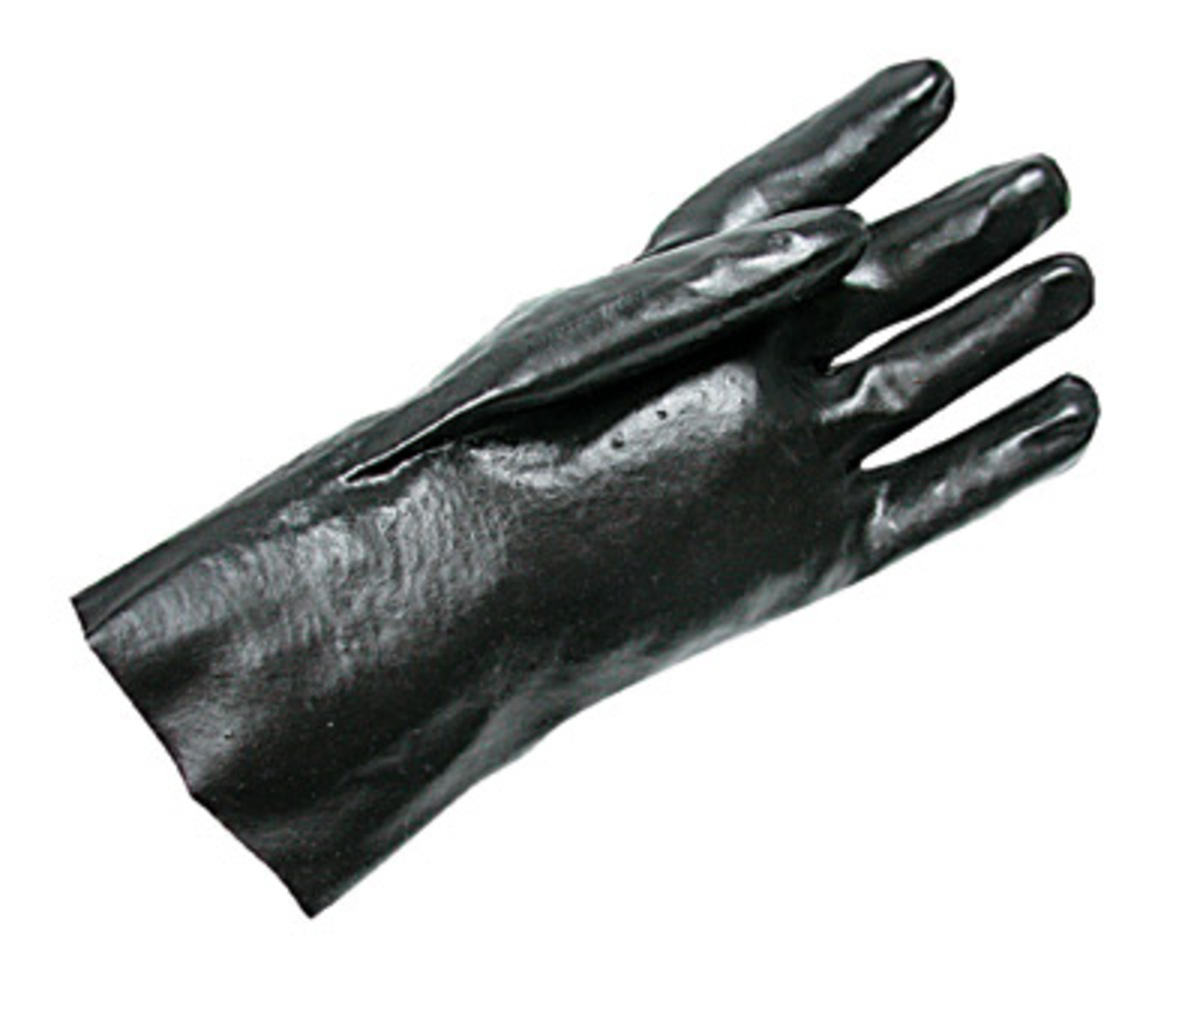 Chemical Resistant Gloves for Sale online